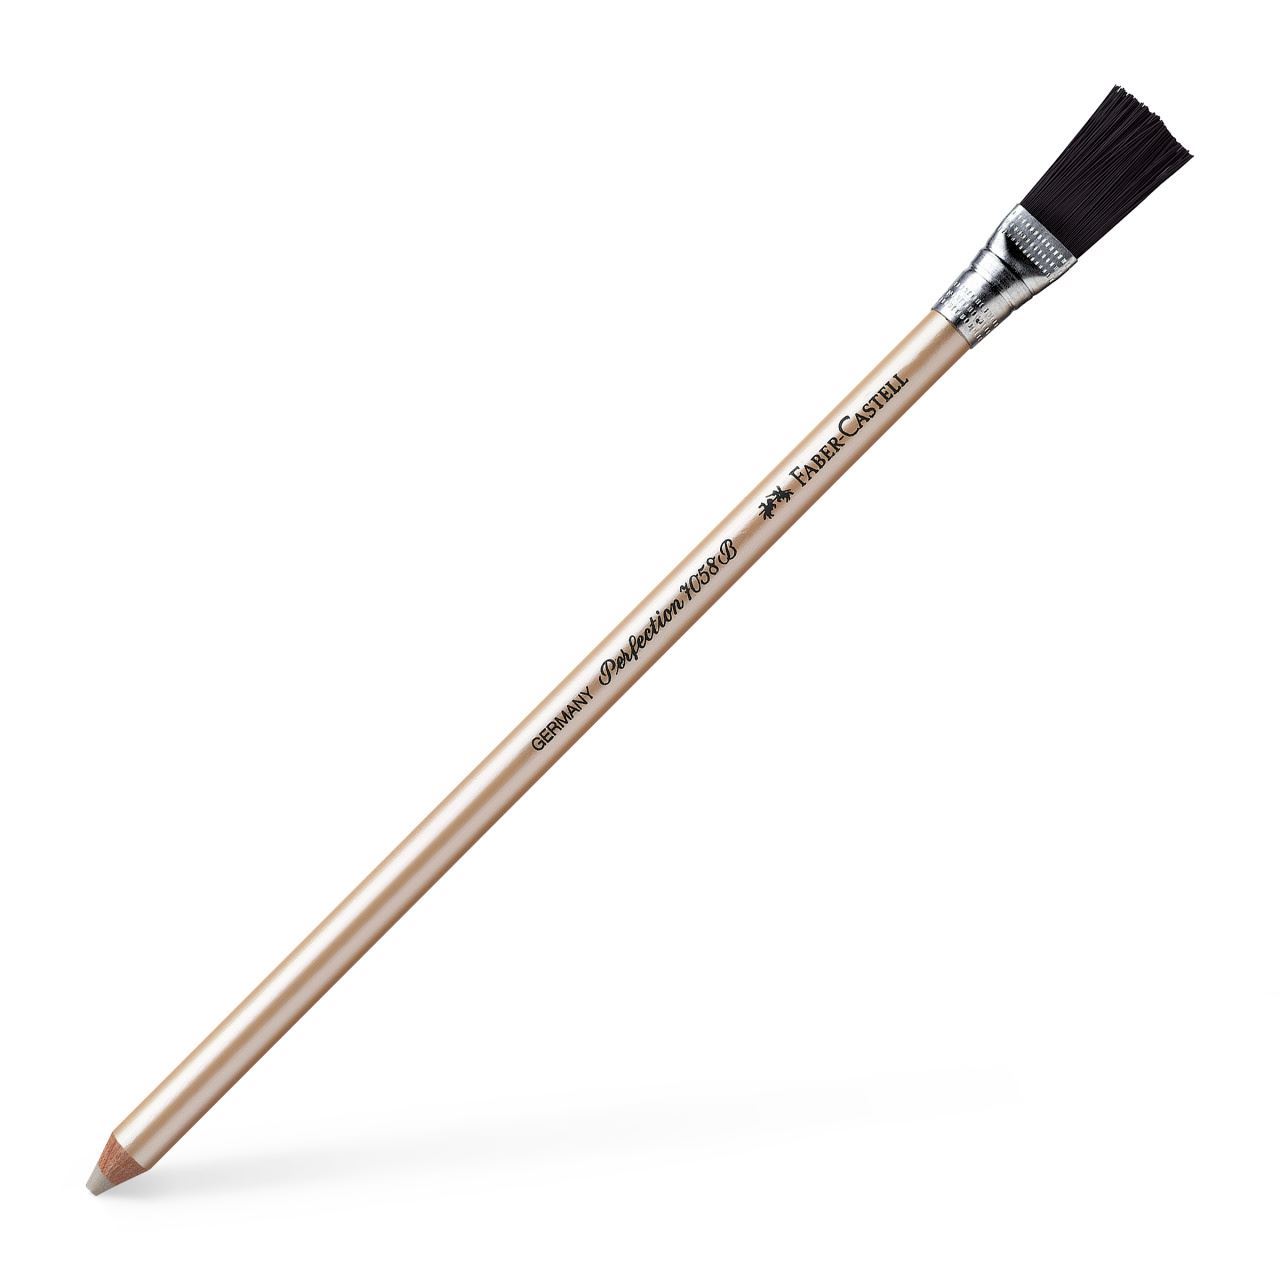 Faber-Castell - Perfection 7058 B eraser pencil